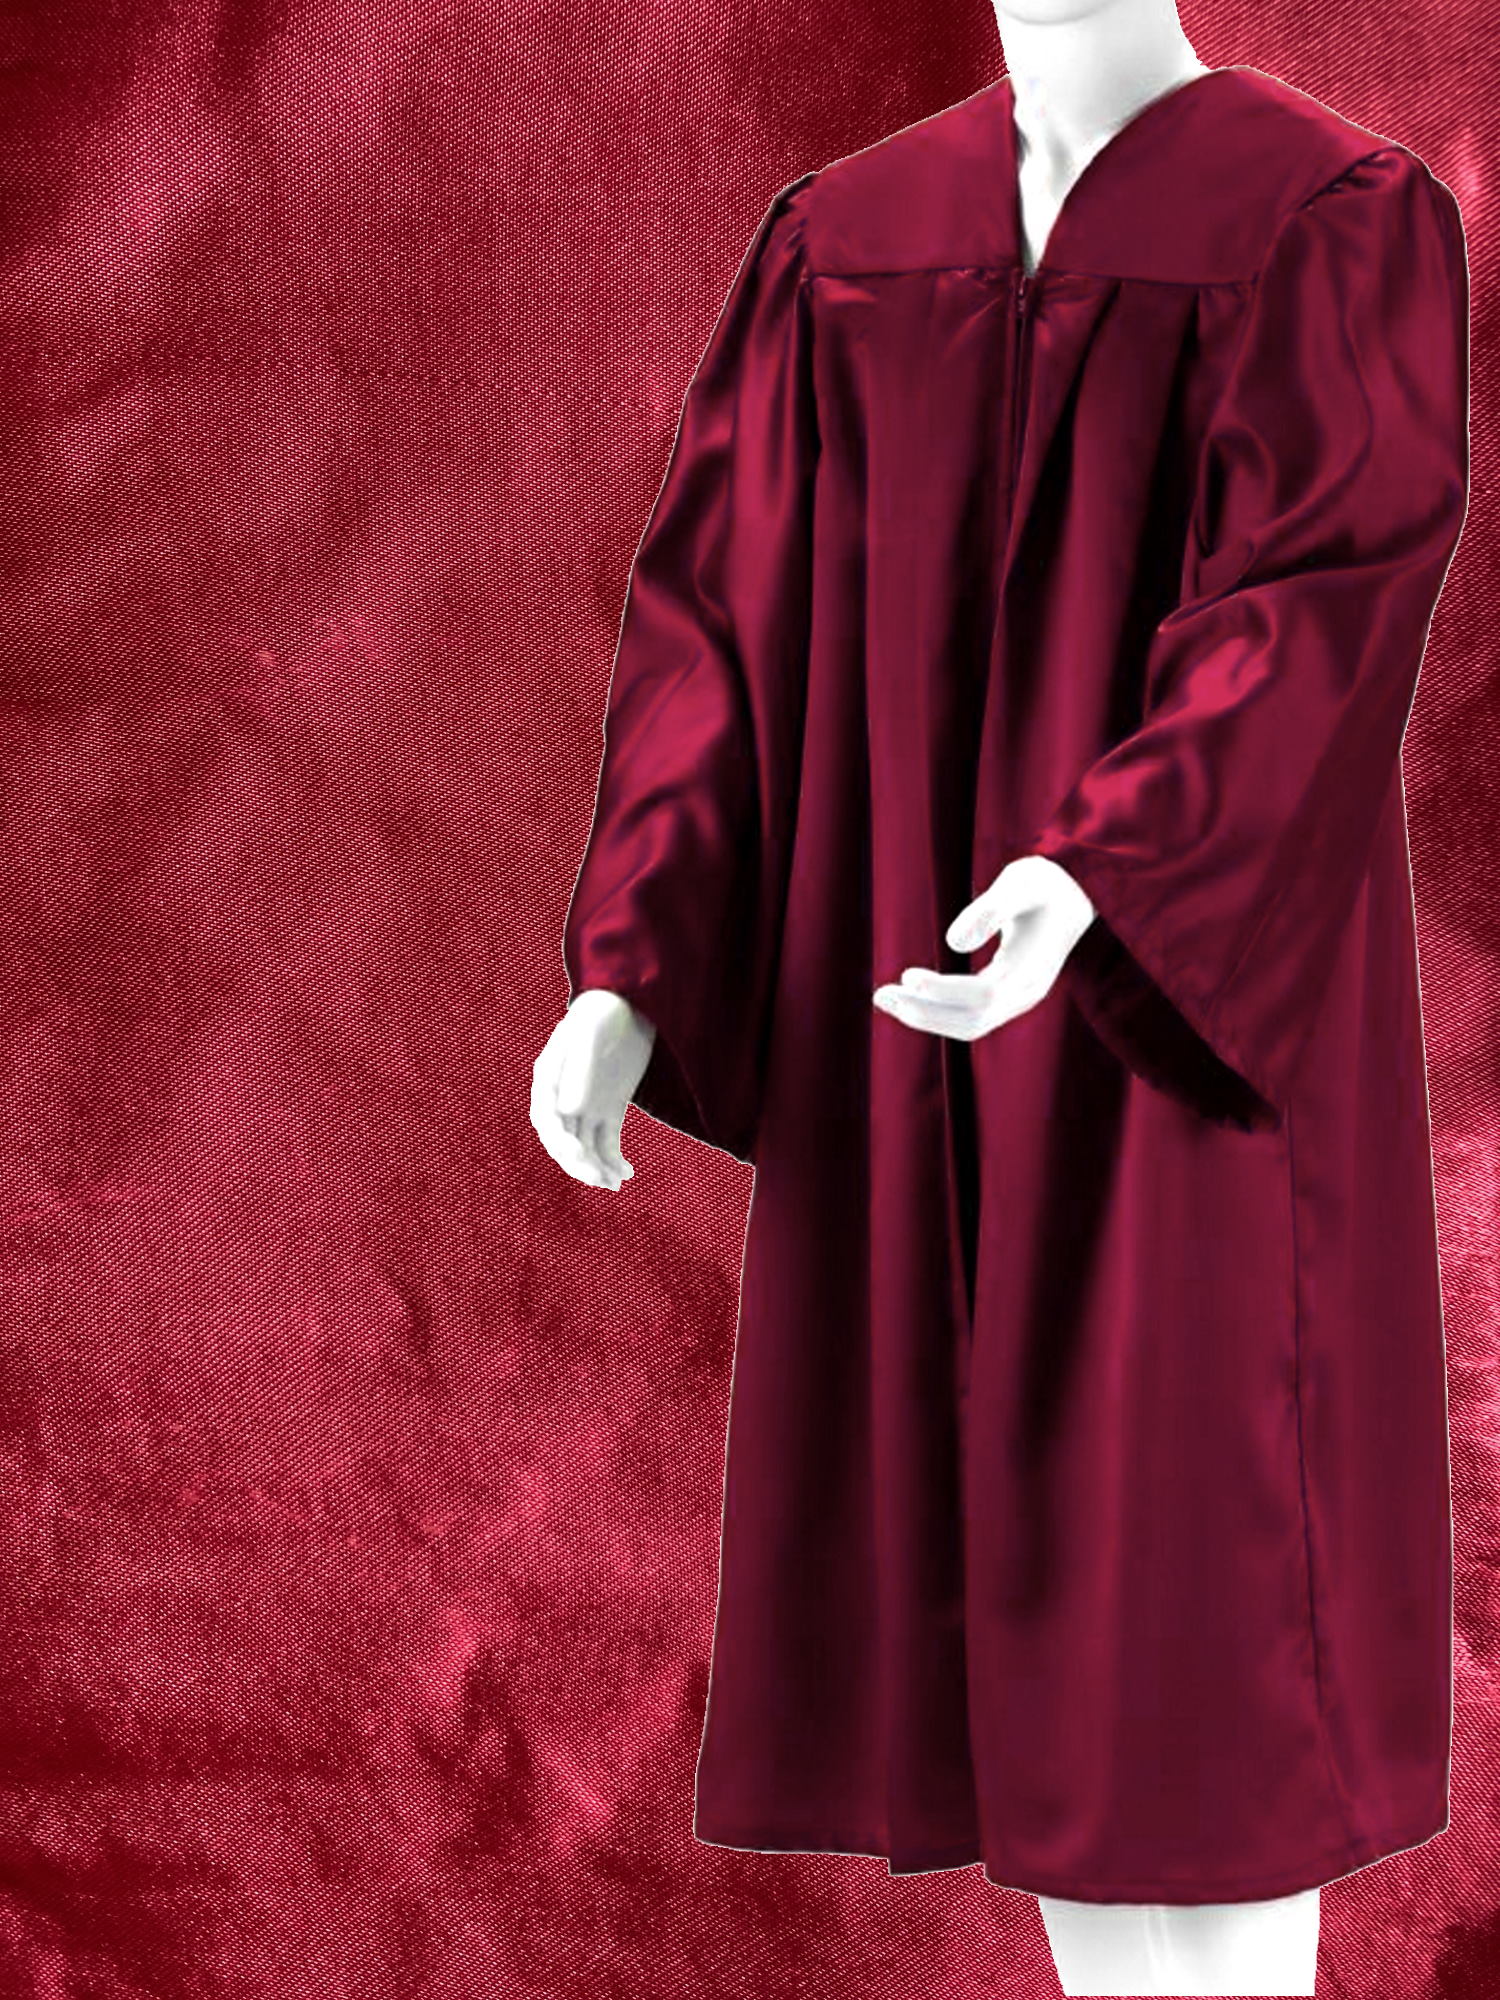 Kokott Robe Bordeaux, glänzend, Graduation Gown, Chorrobe